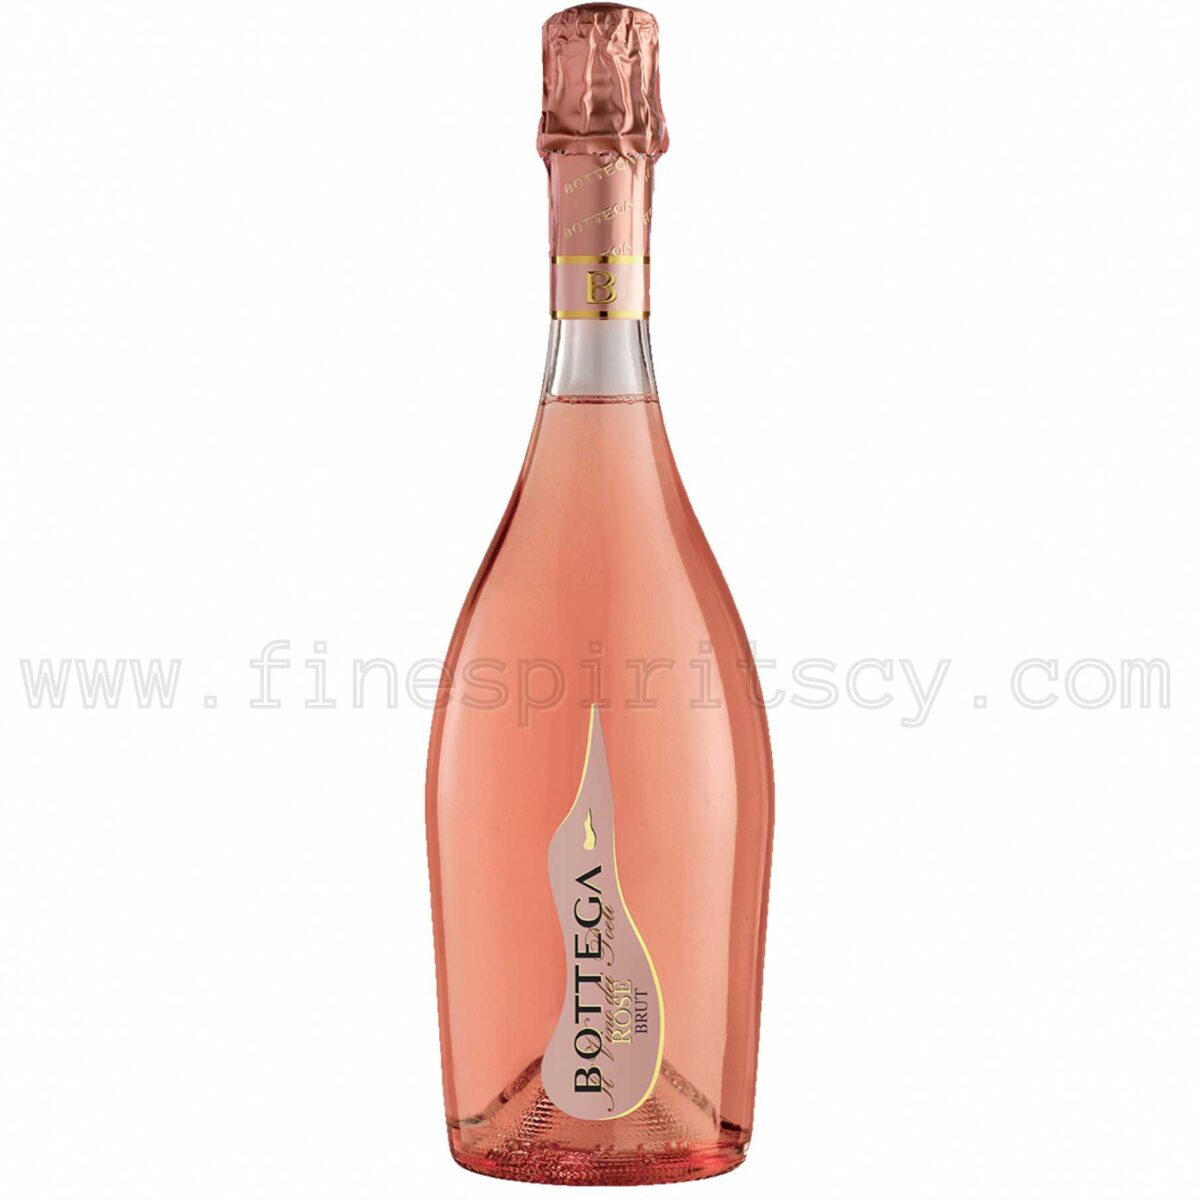 Bottega Rose Brut Cyprus Wine Sparkling Price Shop Order Online Buy FSCY